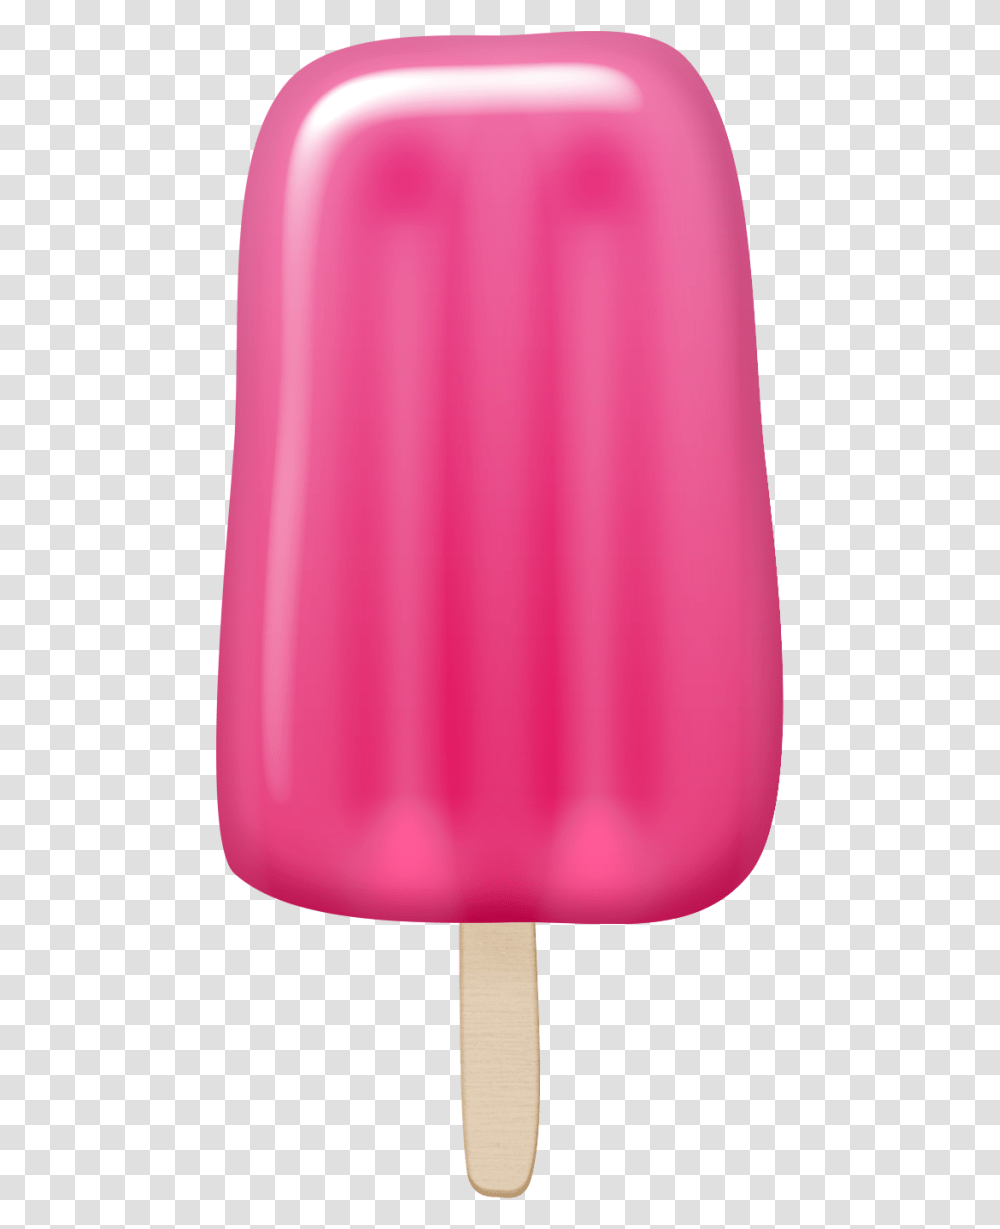 Fotki Food Clipart Clipart Images Ice Cream Treats Frozen Treats Clip Art, Lamp, Bottle, Balloon, Ice Pop Transparent Png